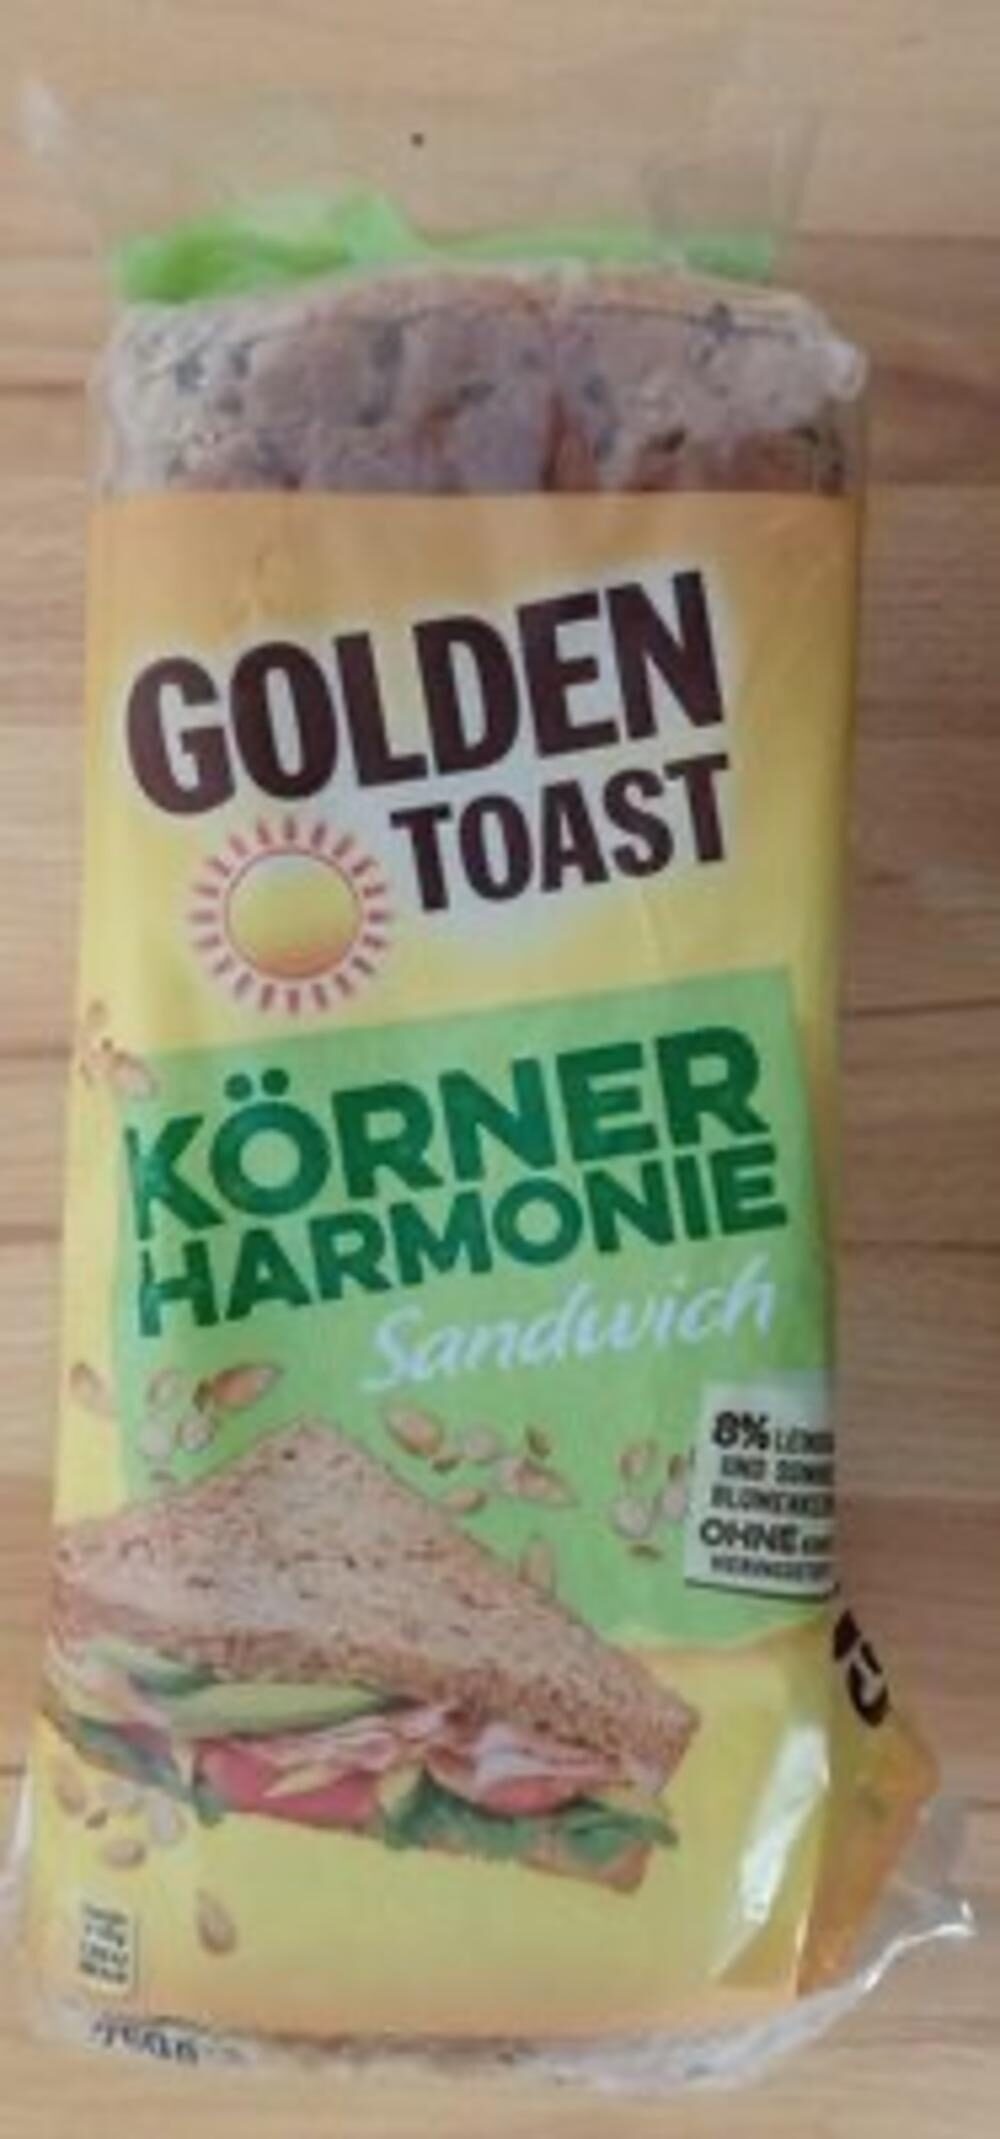 Körner Harmonie Sandwich - Product - de